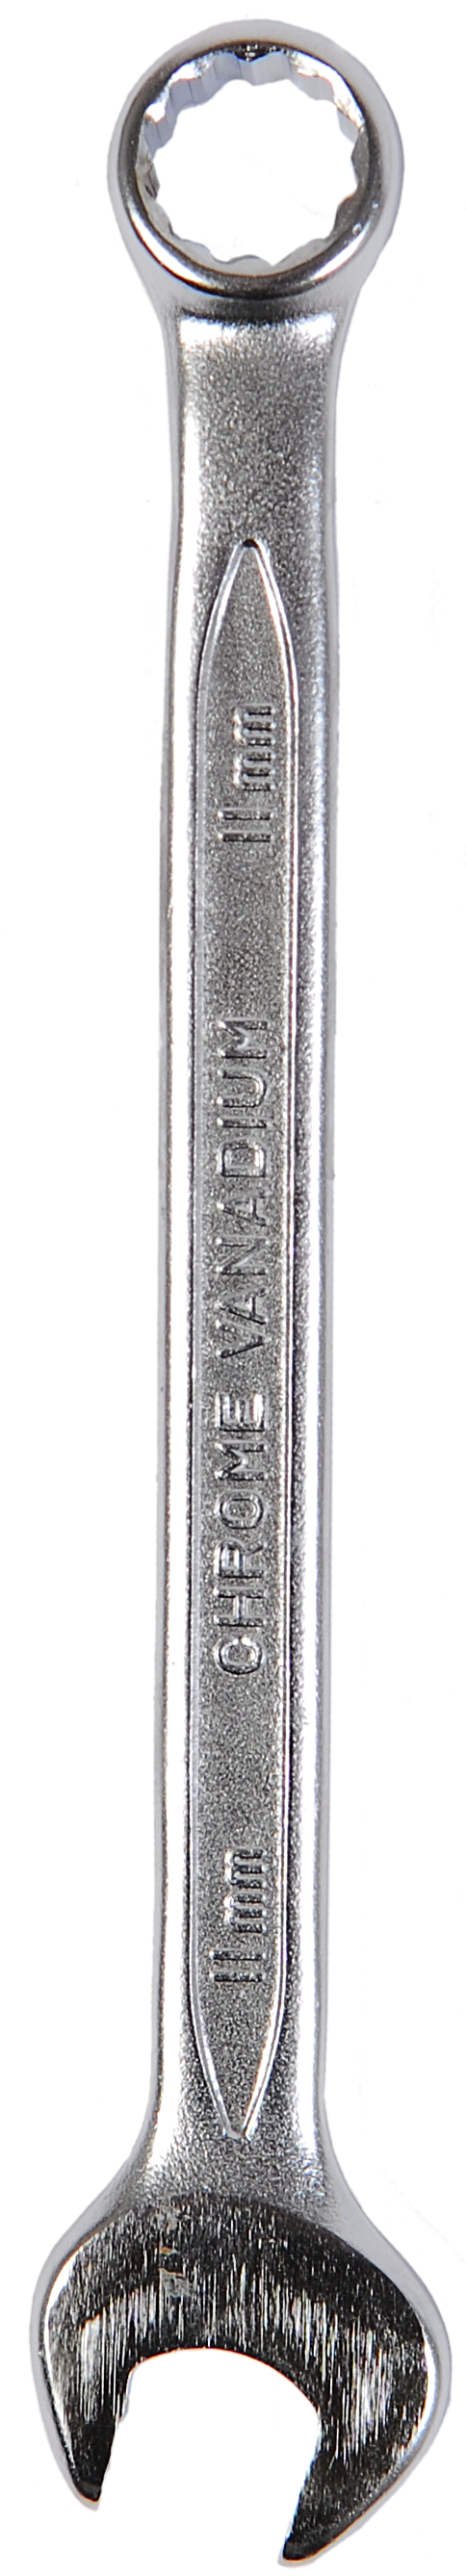 Stanley Slimline Combination Wrench 11mm